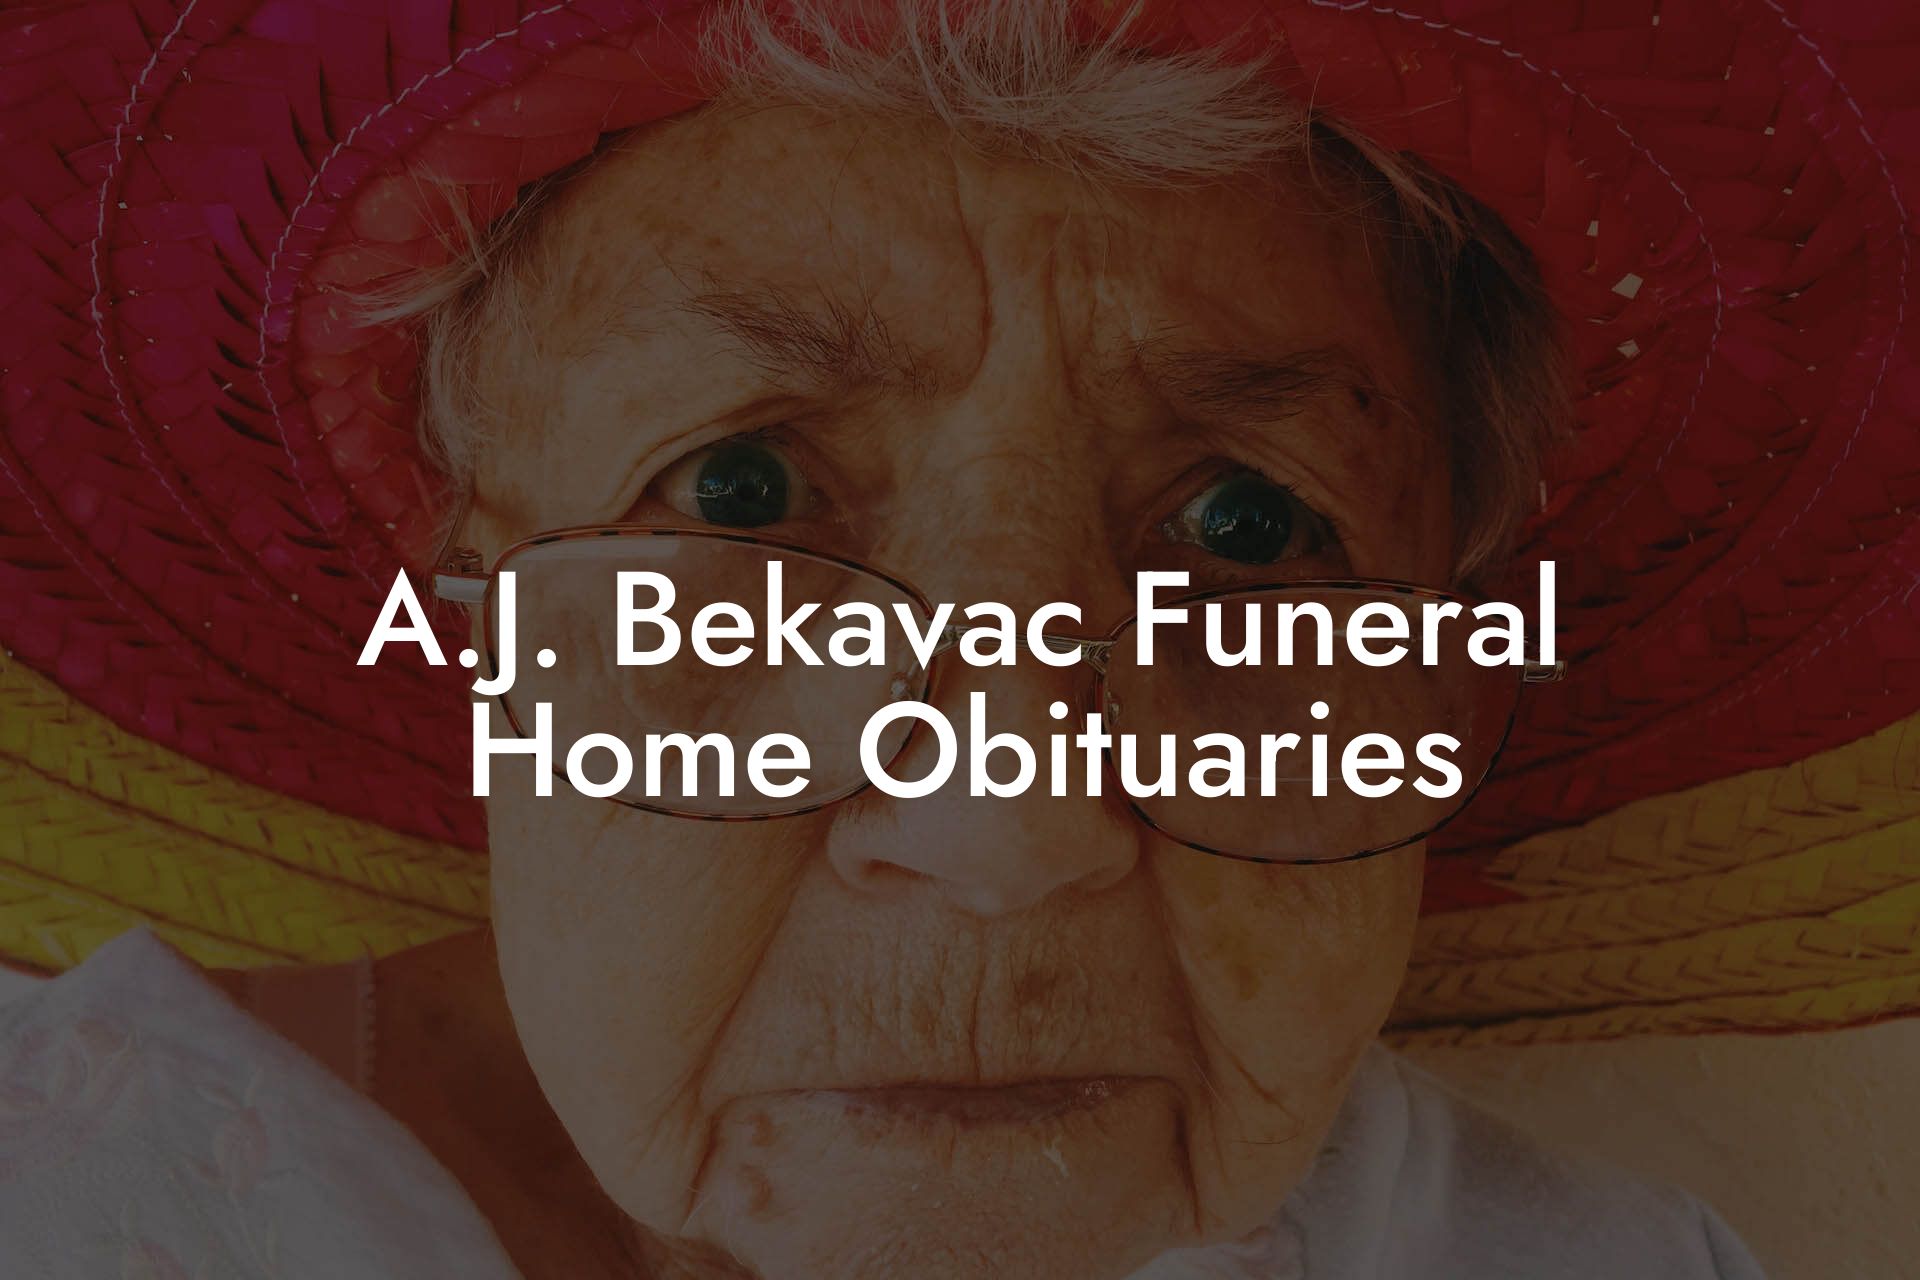 A.J. Bekavac Funeral Home Obituaries